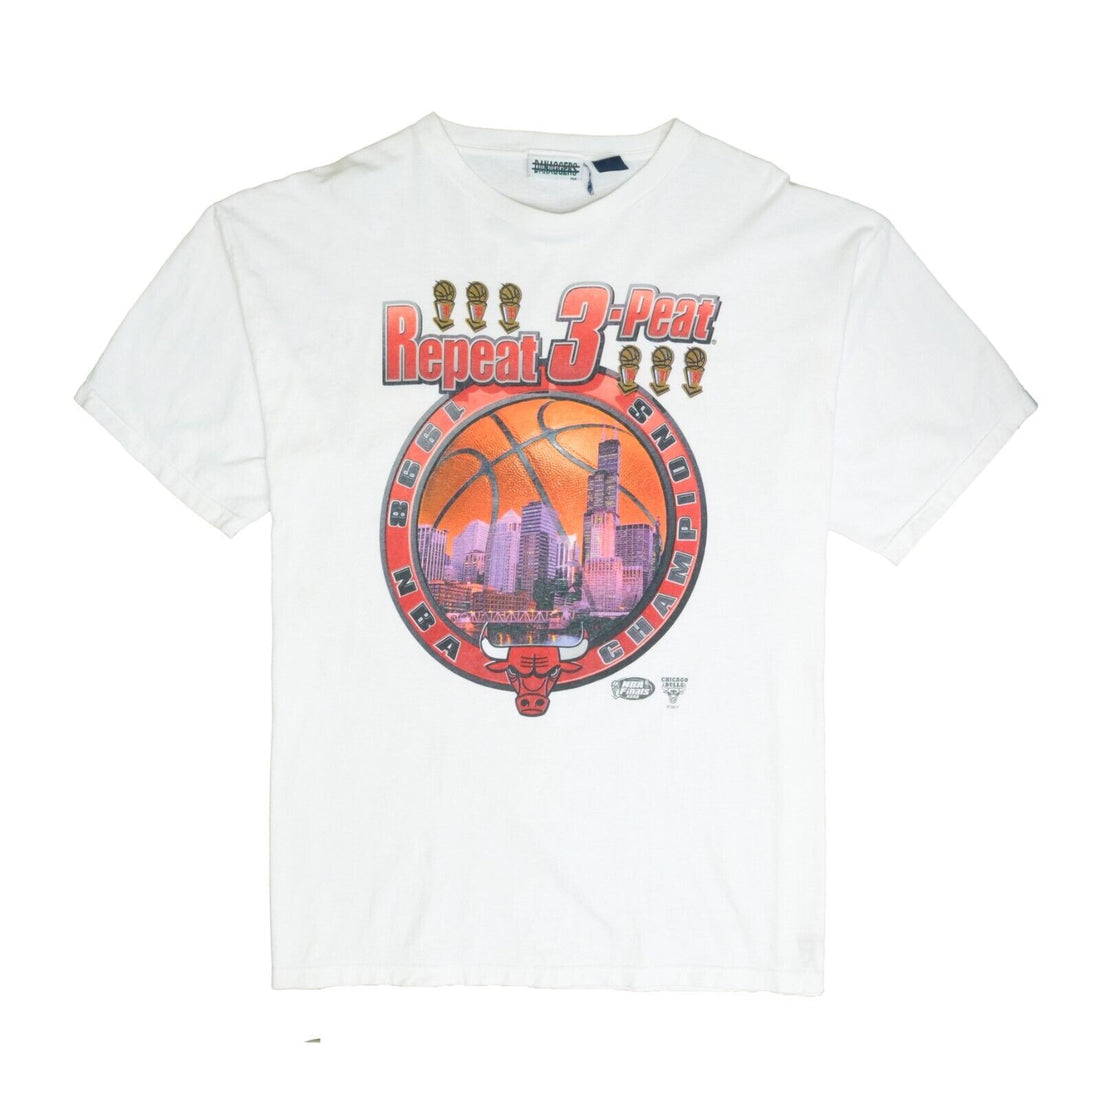 Vintage Chicago Bulls 3 Peat Champions T-Shirt Size XL White 1998 90s NBA